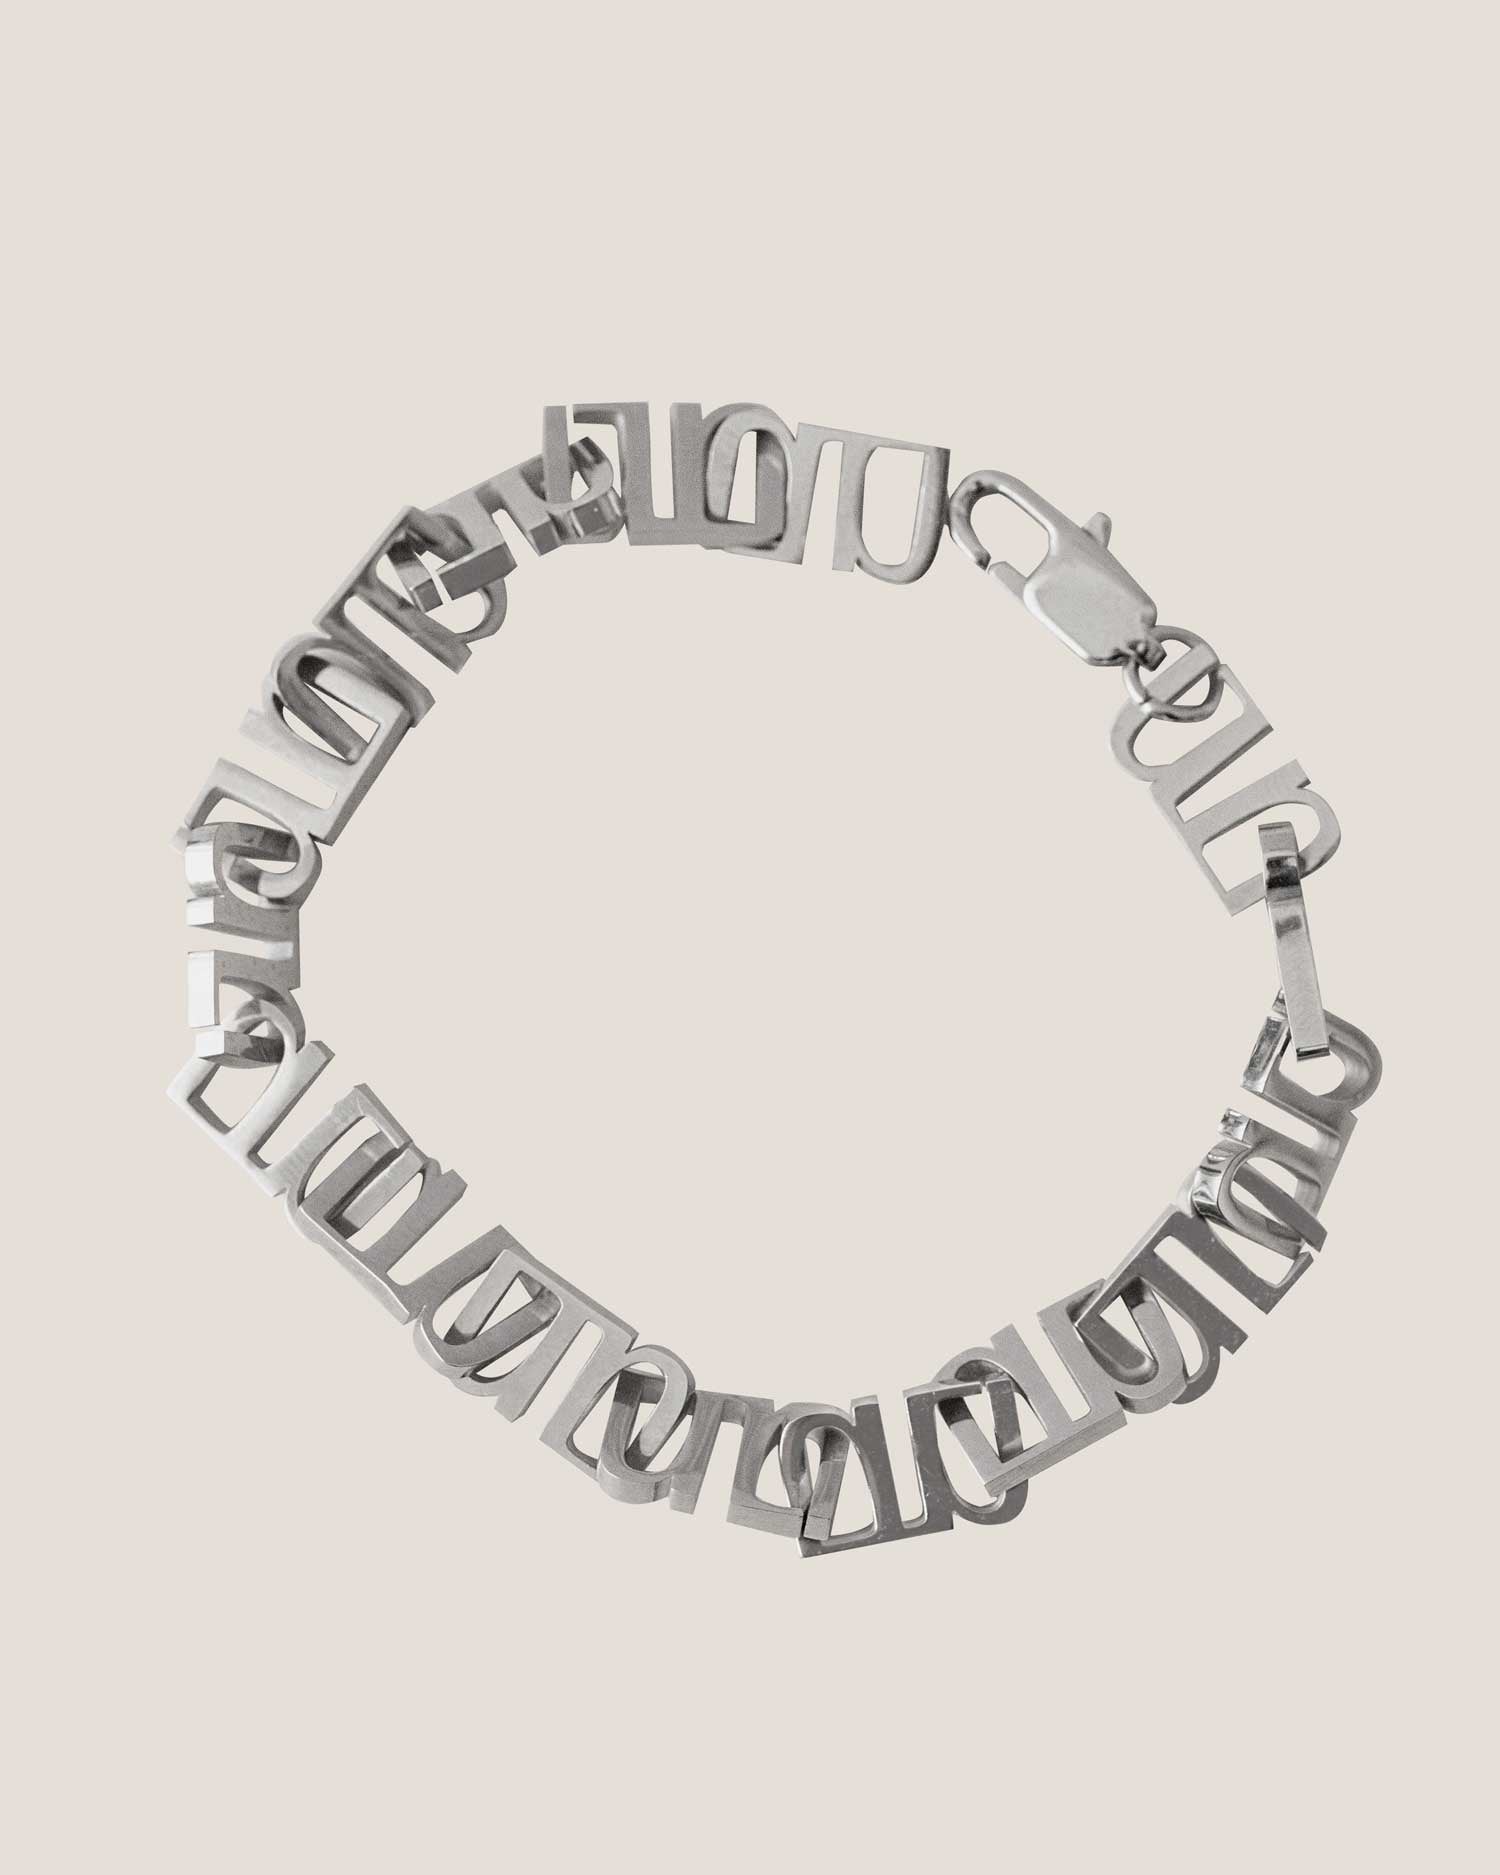 Gung Iconic Silver Chain Bracelet